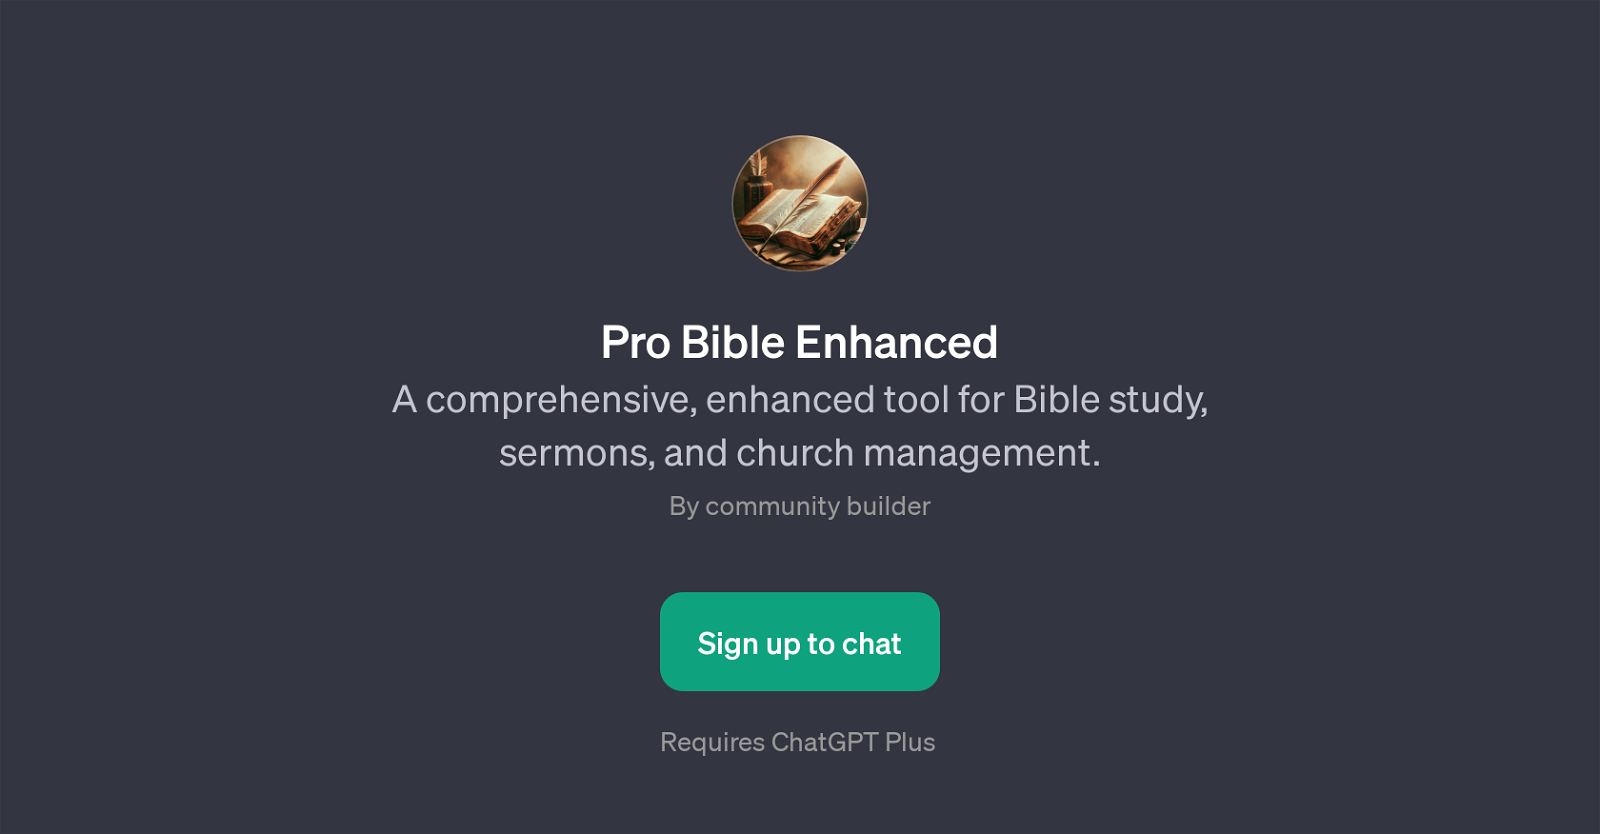 Pro Bible Enhanced website